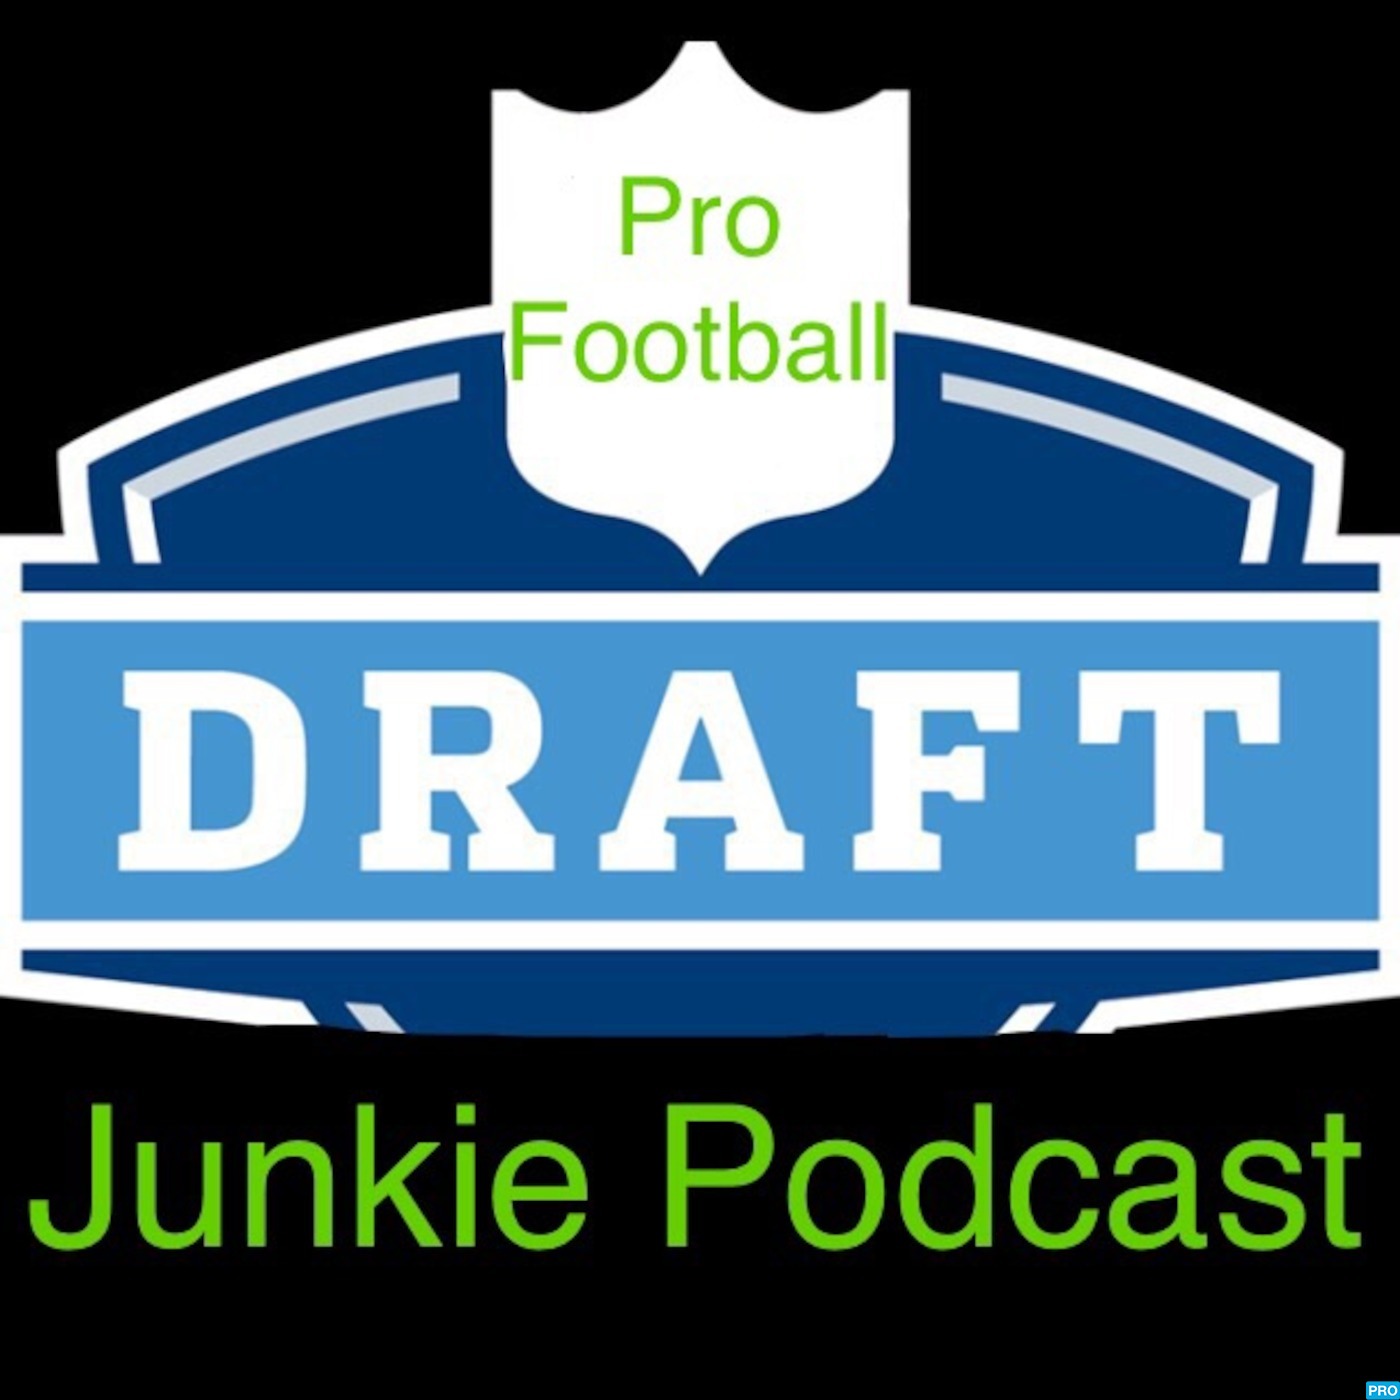 Pro Football Draft Junkie Podcast